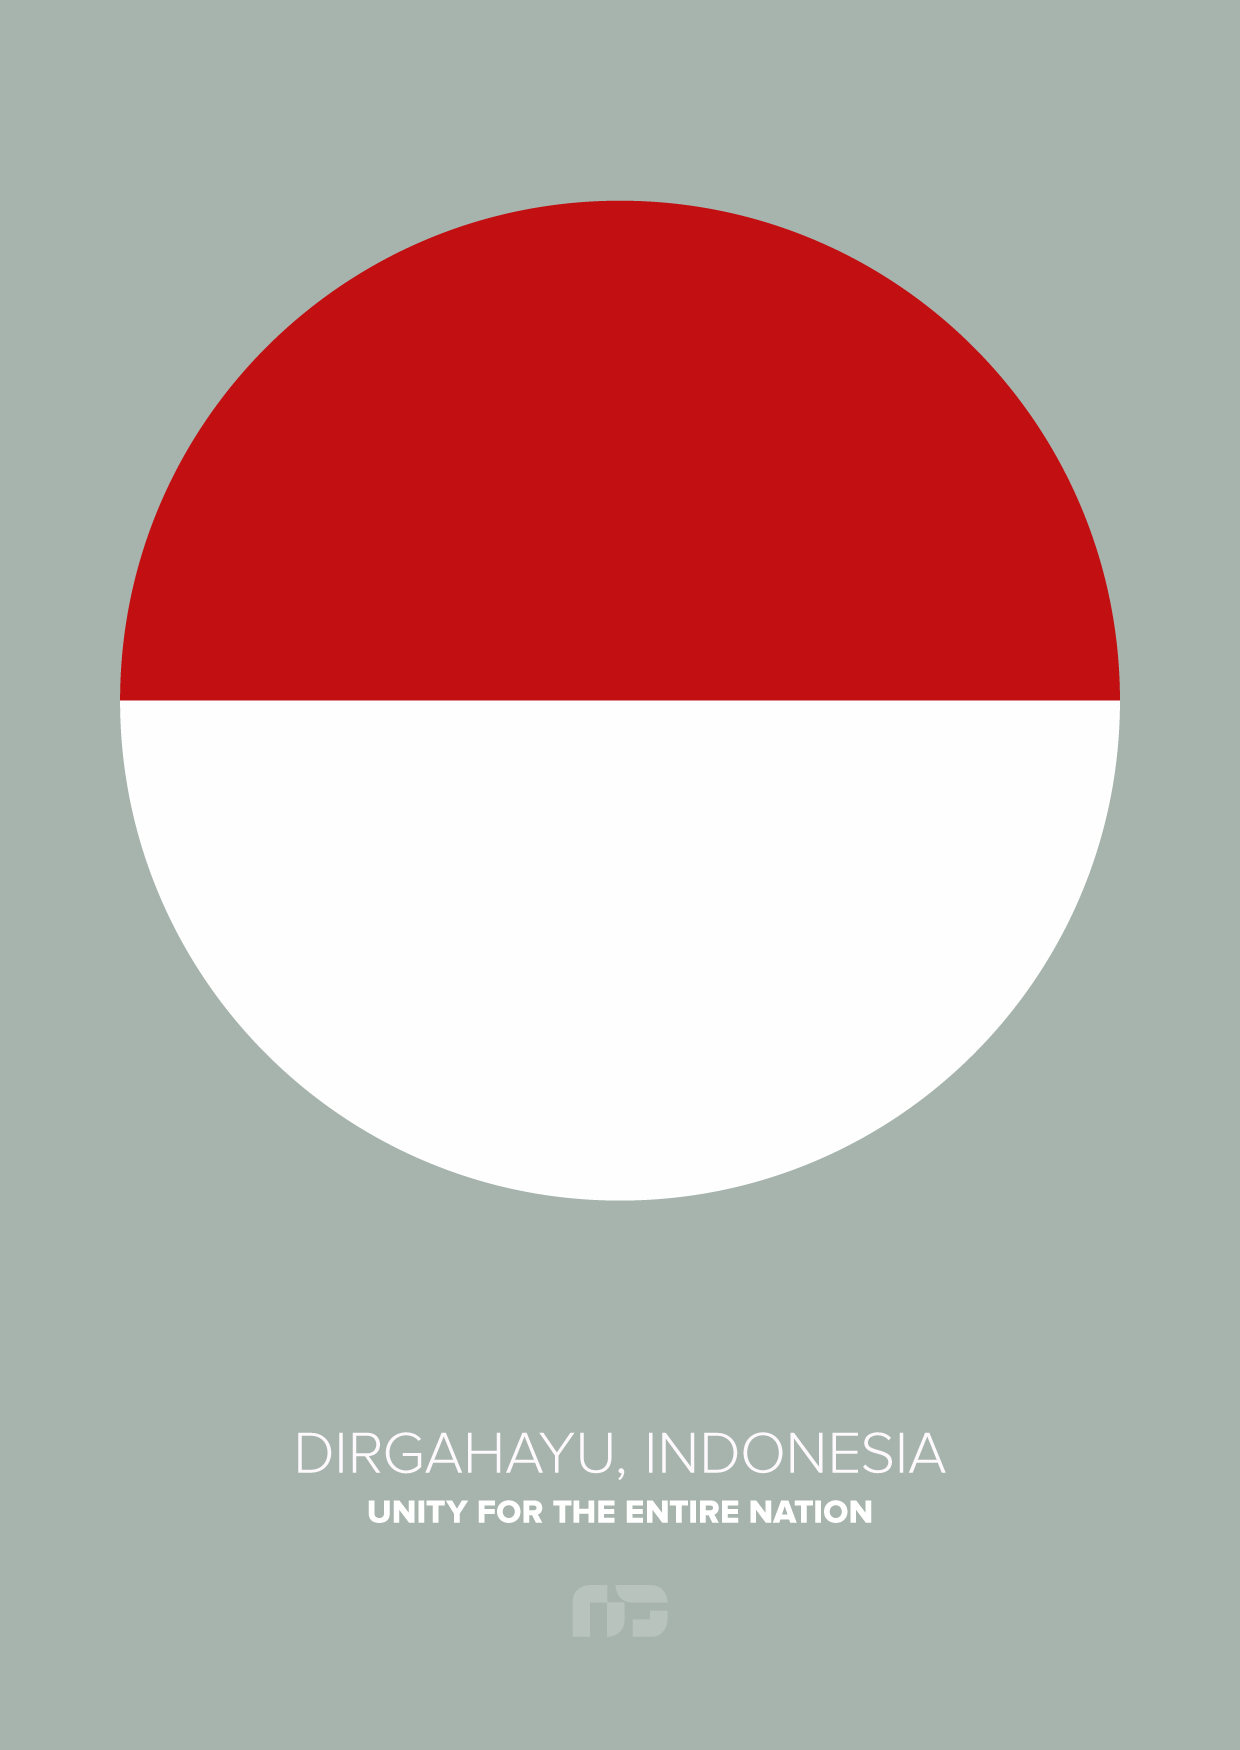 Dirgahayu, Indonesia